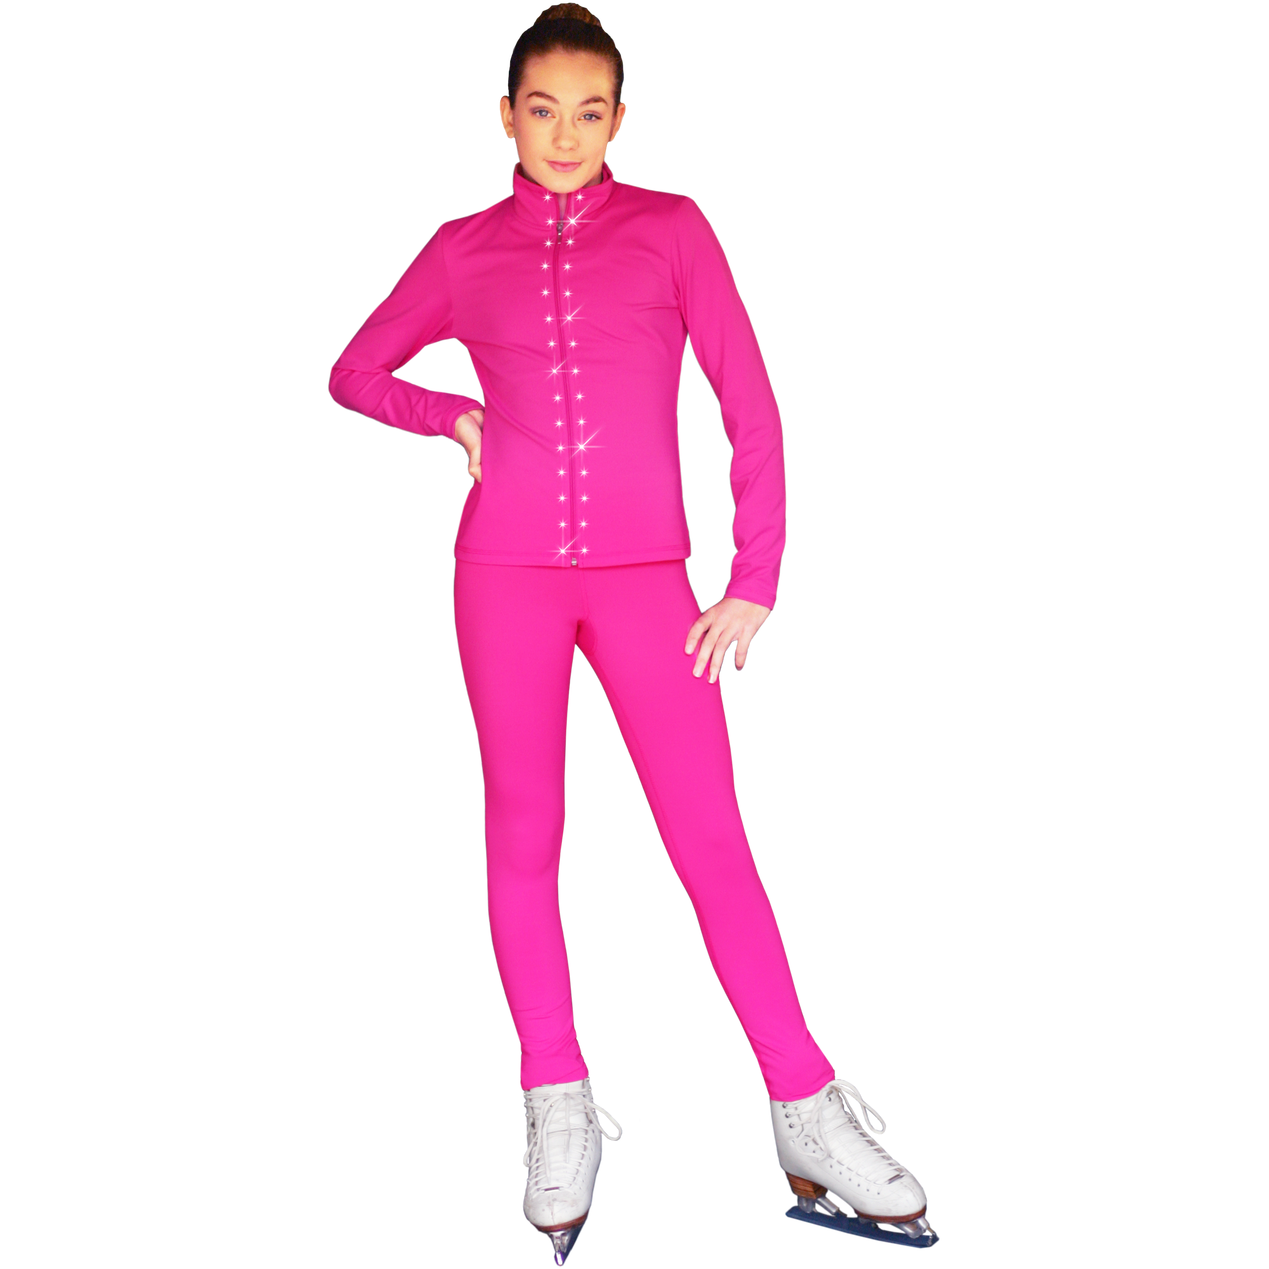 ChloeNoel PS711 Solid Color Skinny Yoga/Off-Ice Elite Pants w/ Front Pocket - The Sharper Edge Skates